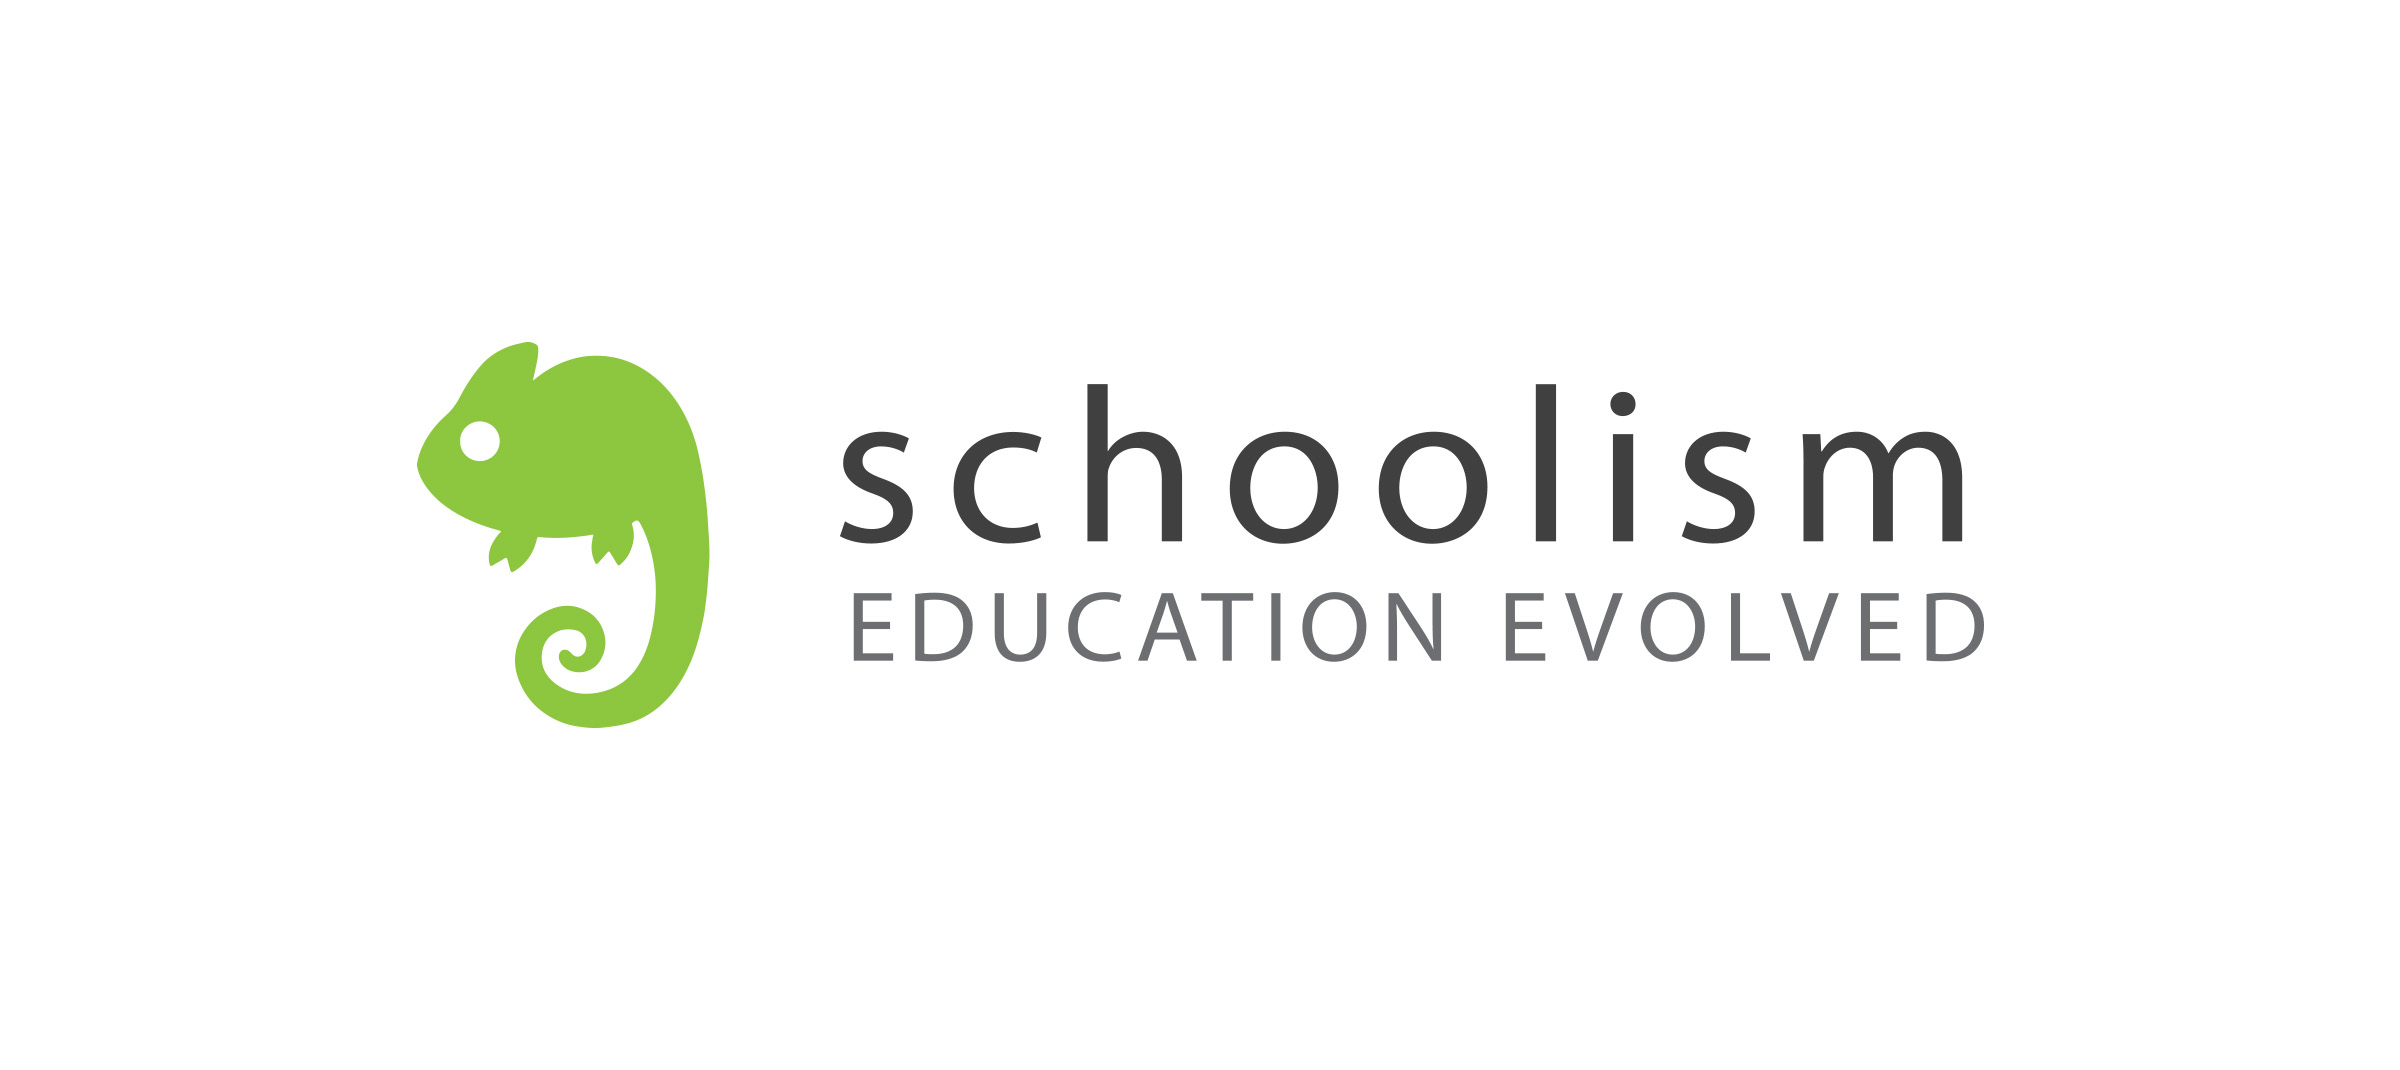 can you download schoolism videos